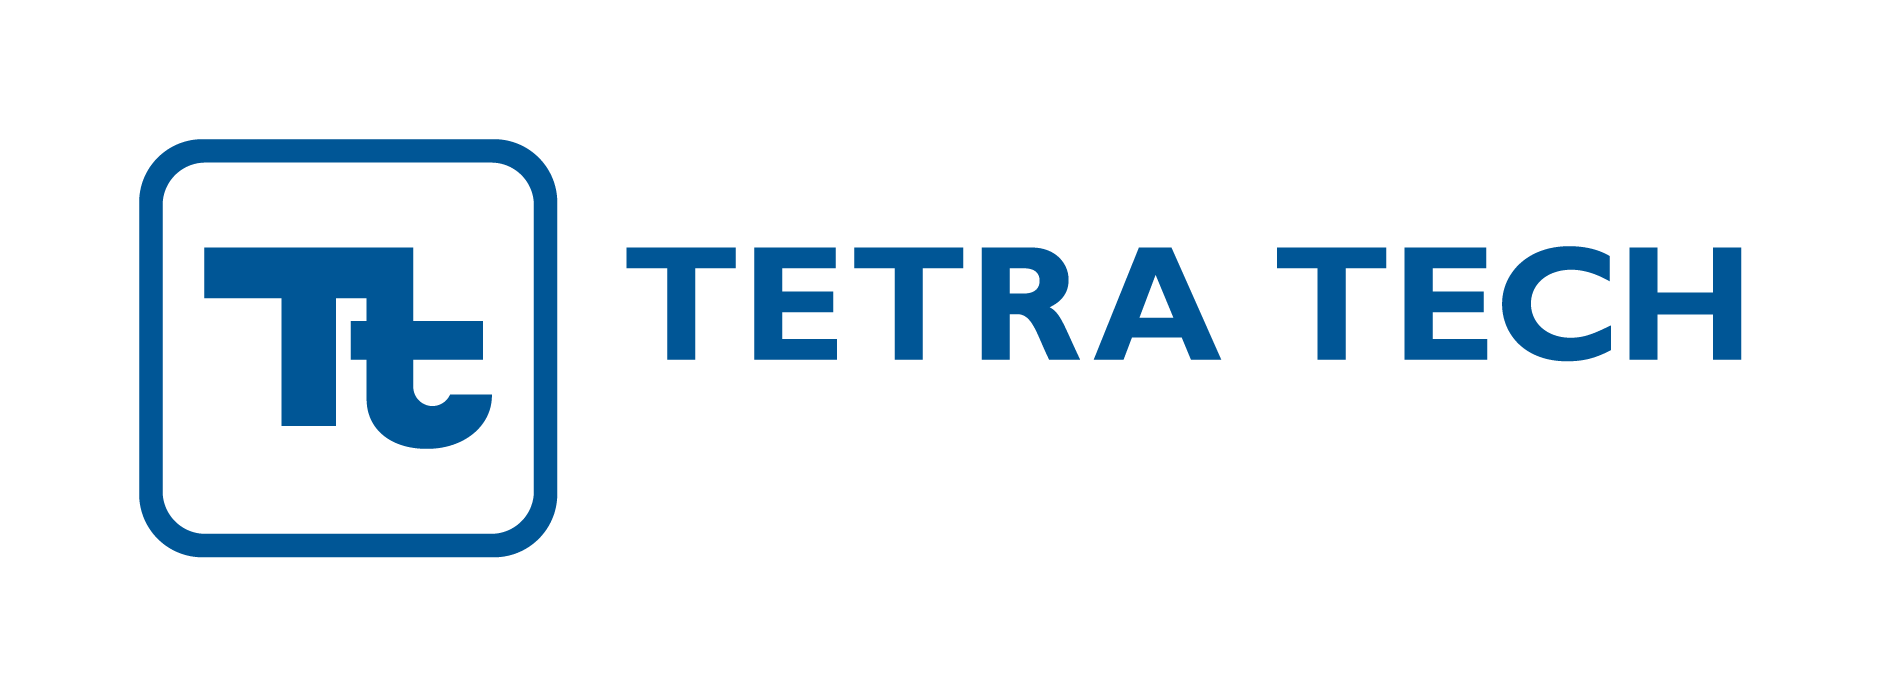 Tetra_Tech_logo.png